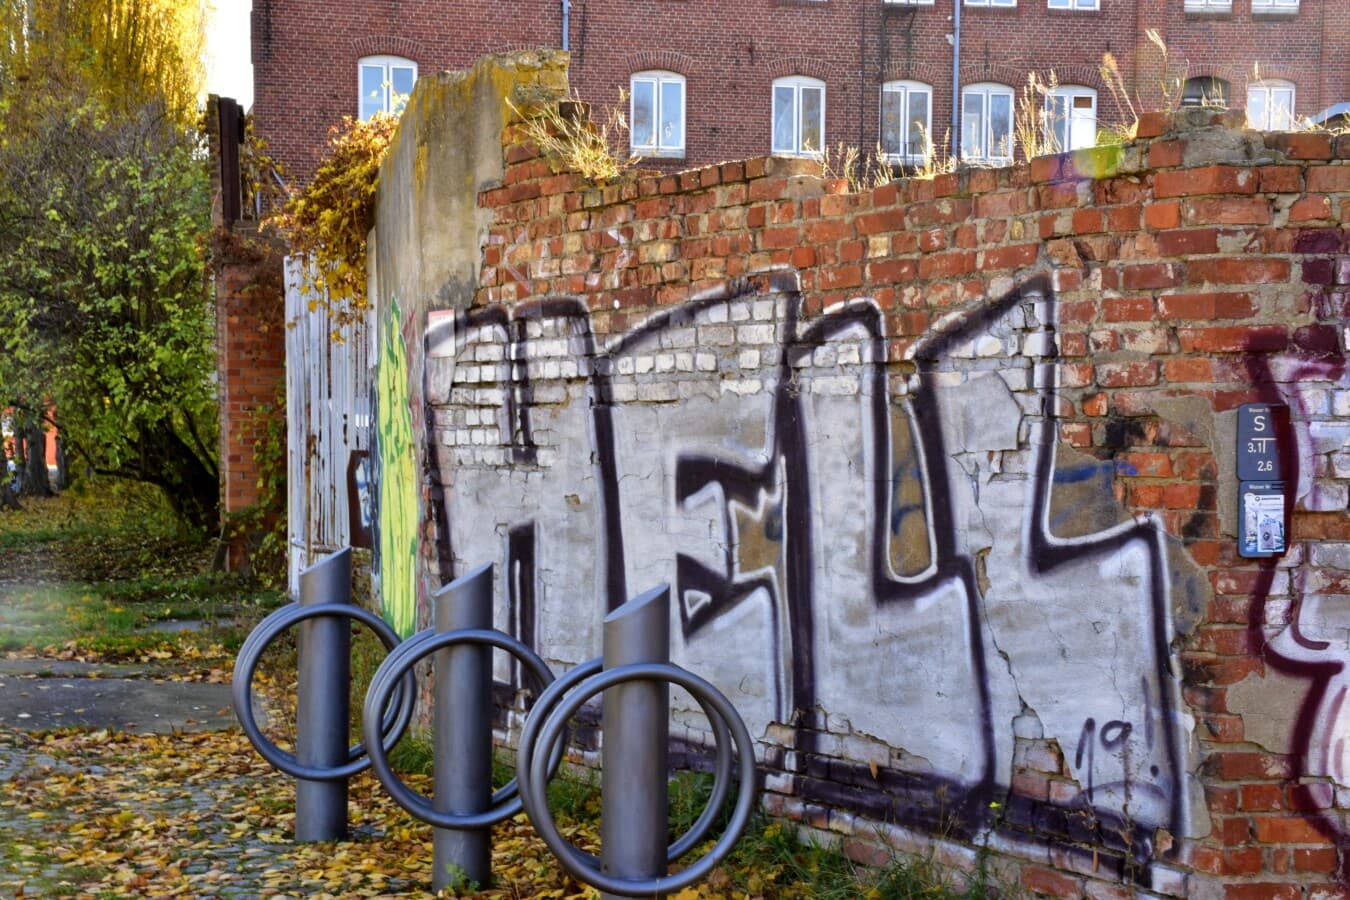 verval, braakliggende, grunge, muur, graffiti, bakstenen, verlaten, stedelijk gebied, bestrating, vandalisme